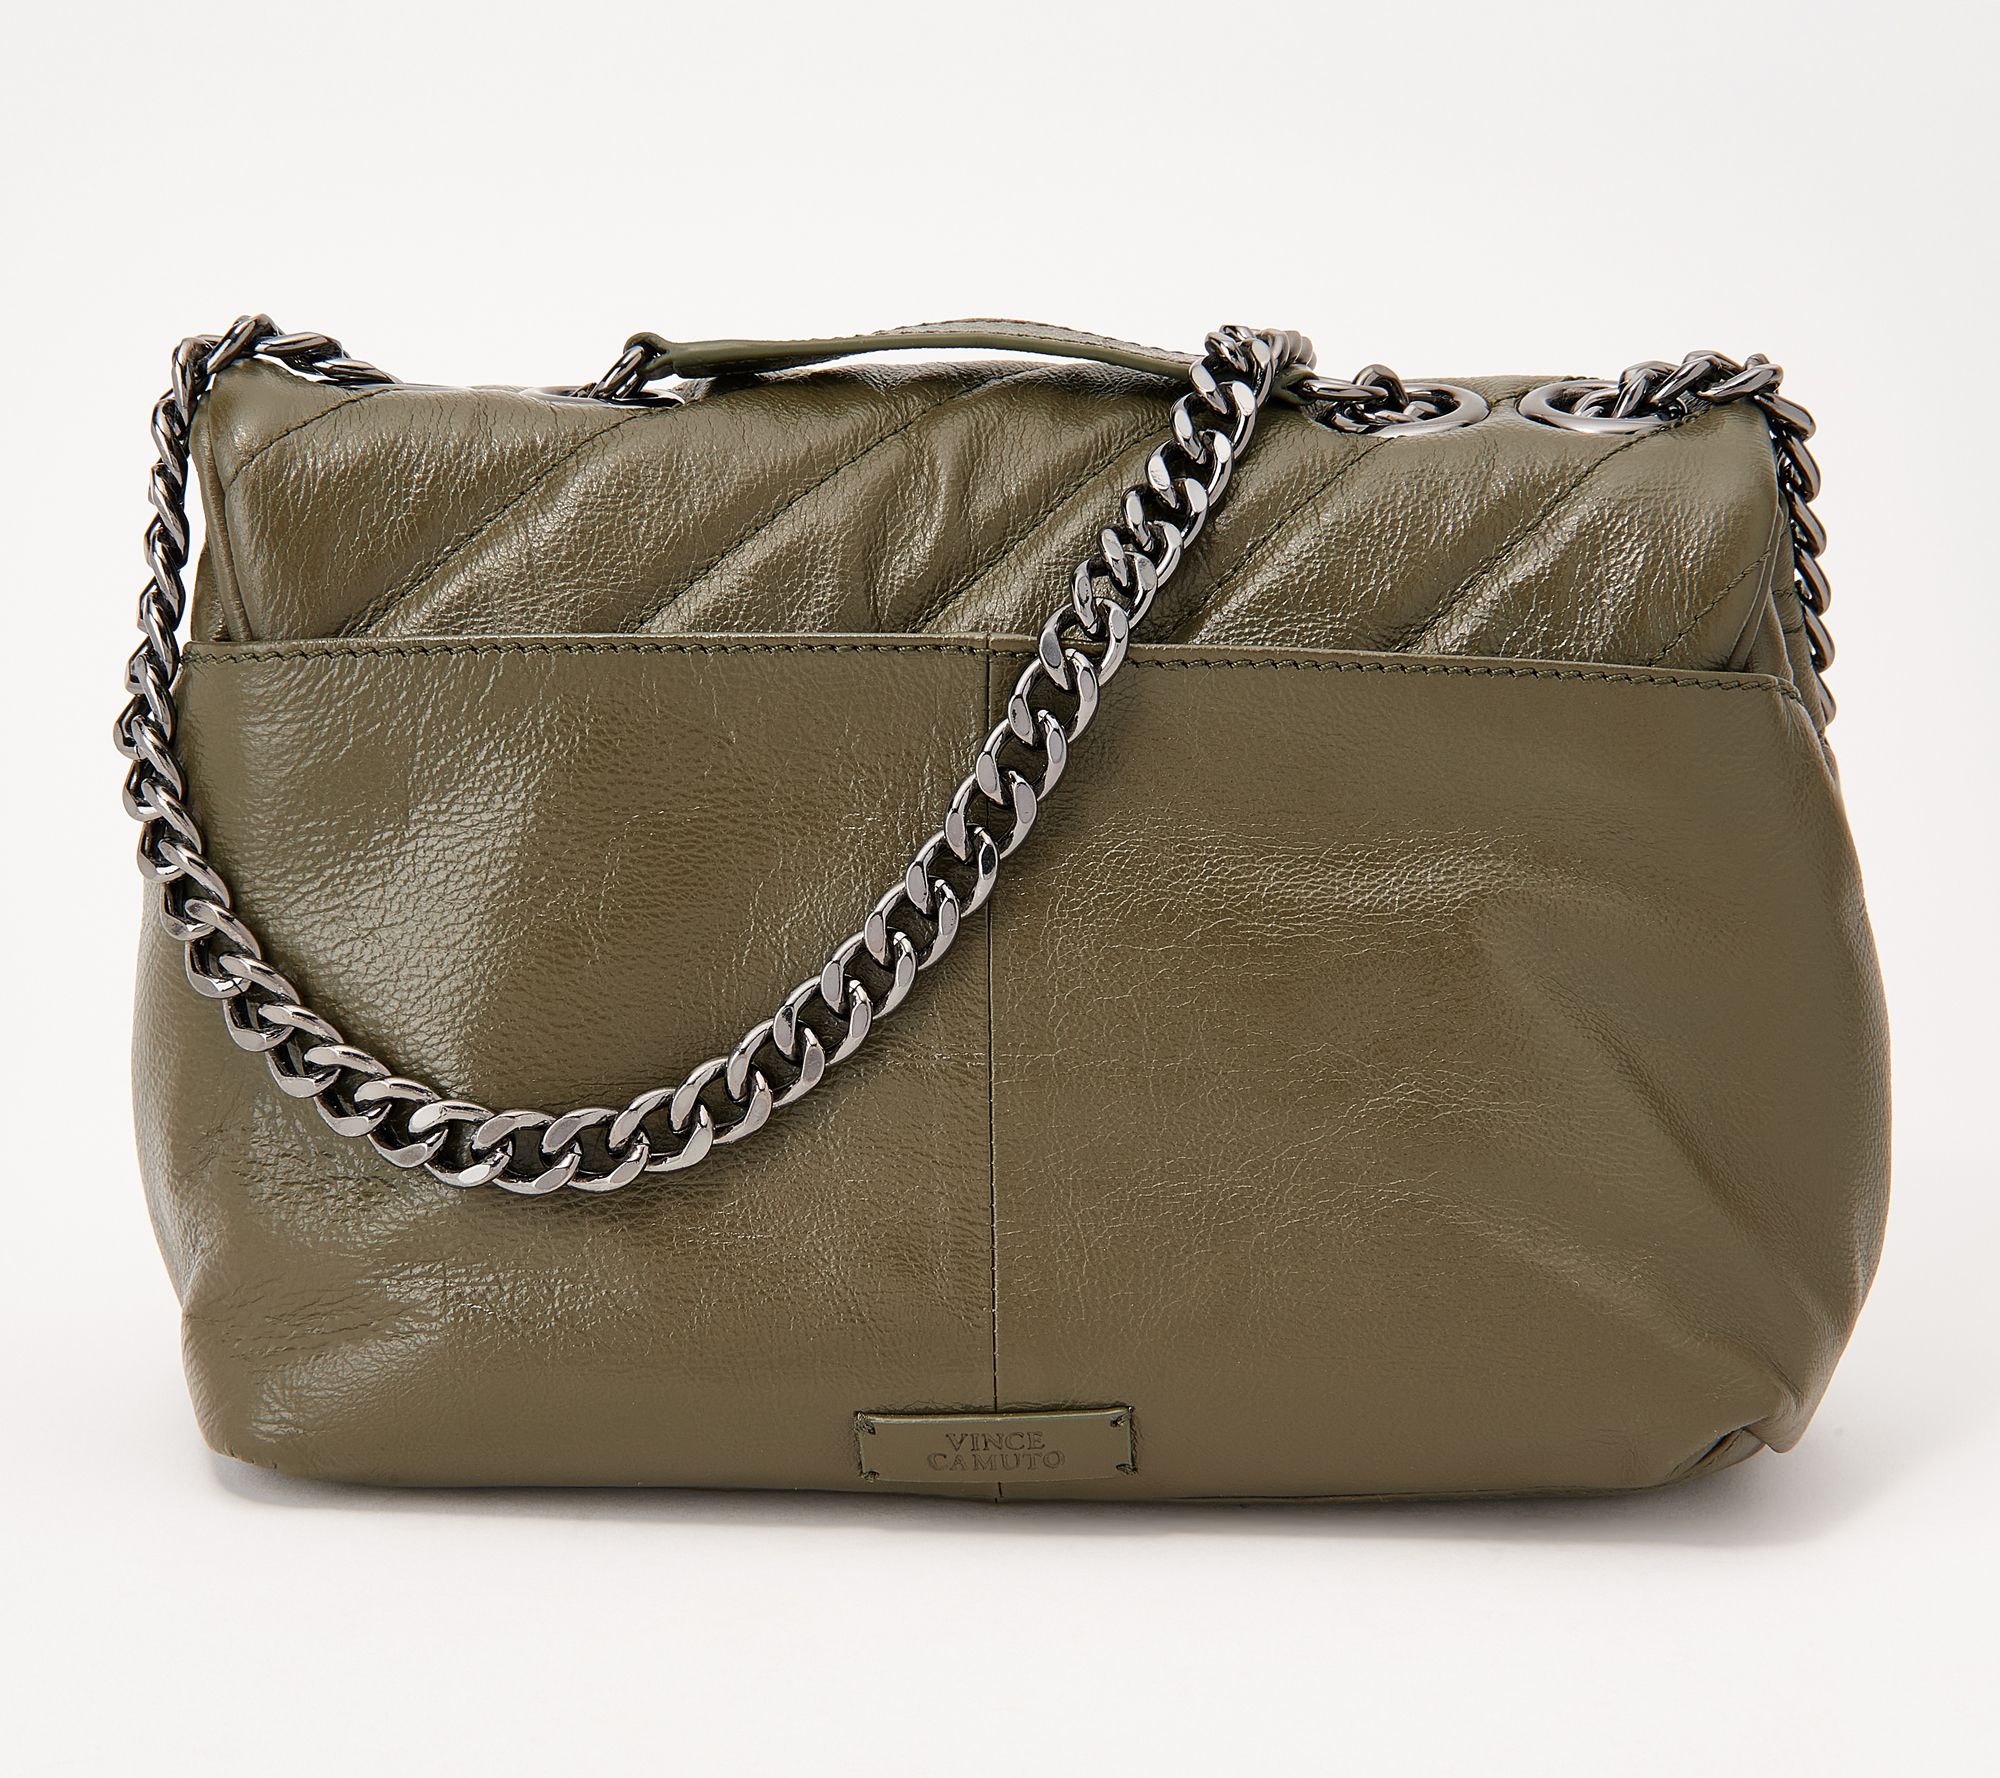 Discontinued Style Dooney & Bourke Sassy Handbag Satchel